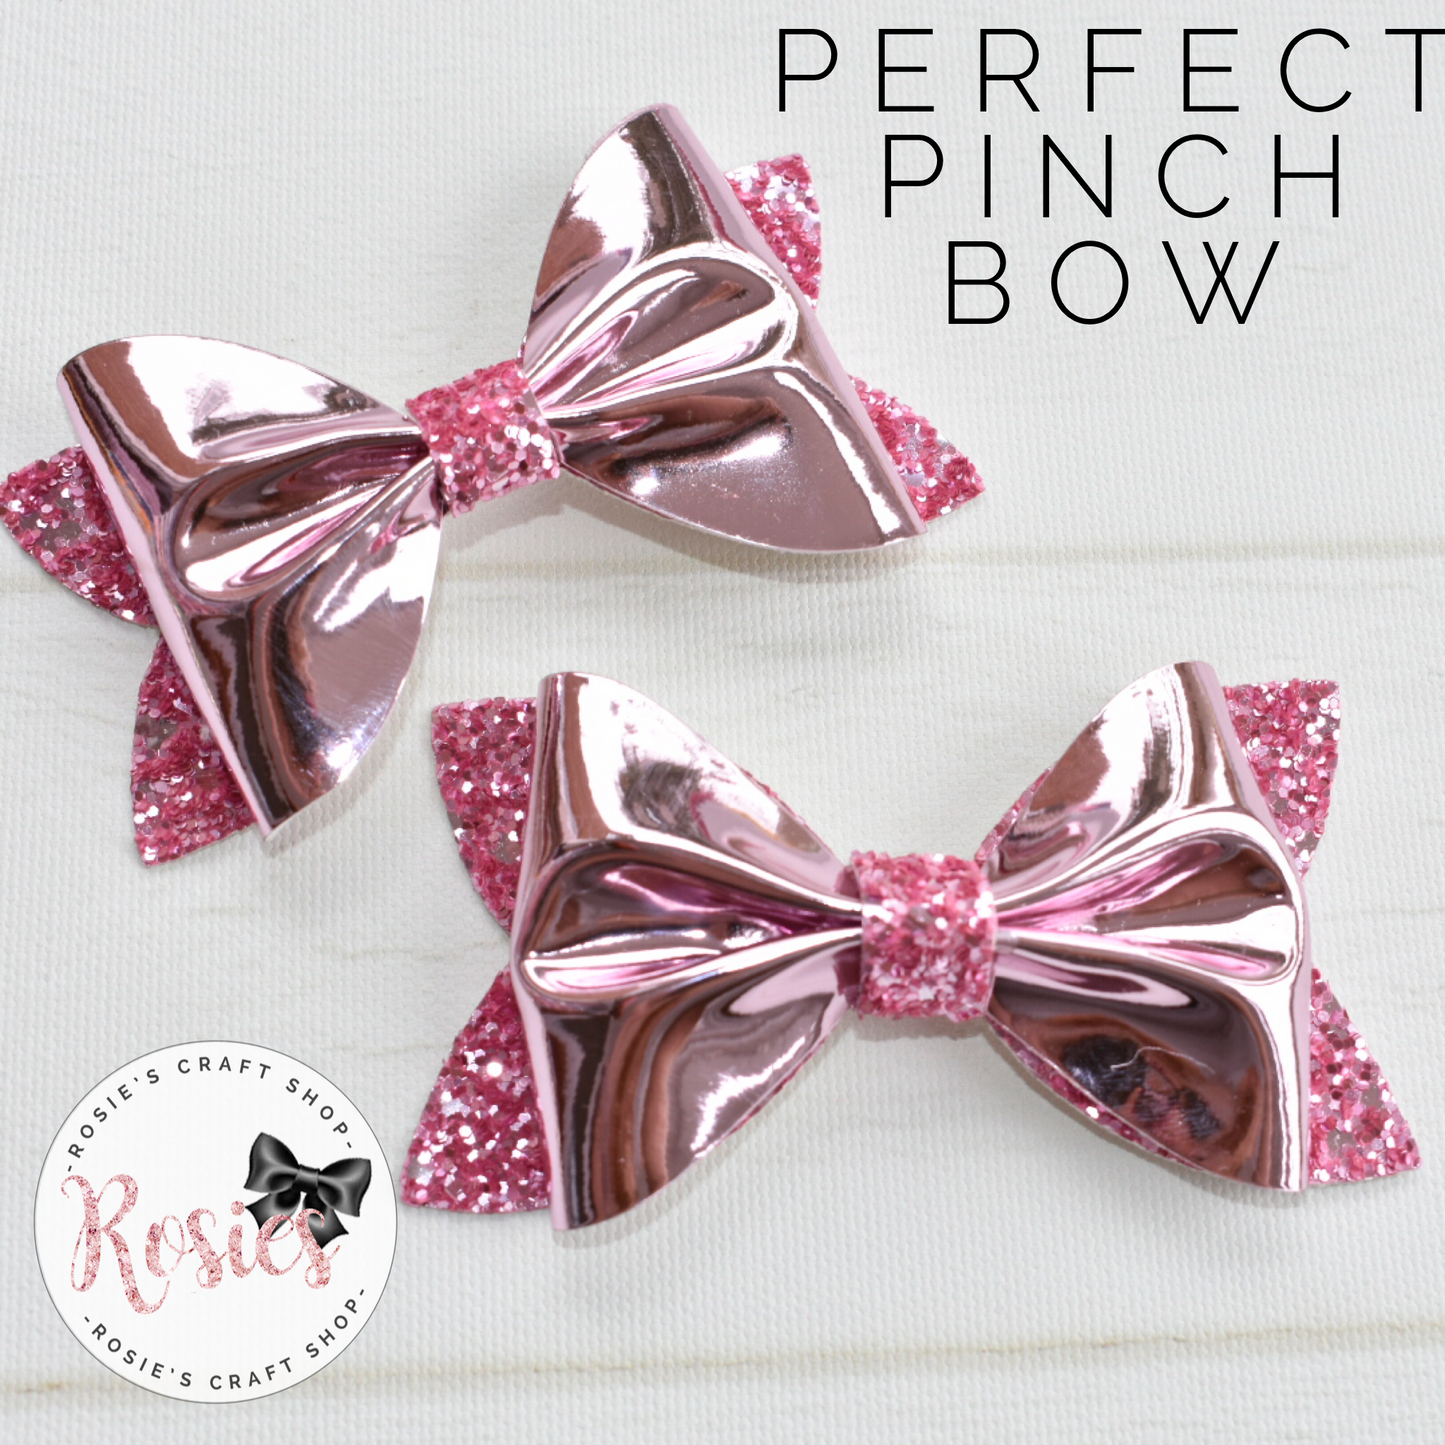 Perfect Pinch Bow Dies Compatible with Sizzix Big Shot - Rosie's Craft Shop Ltd